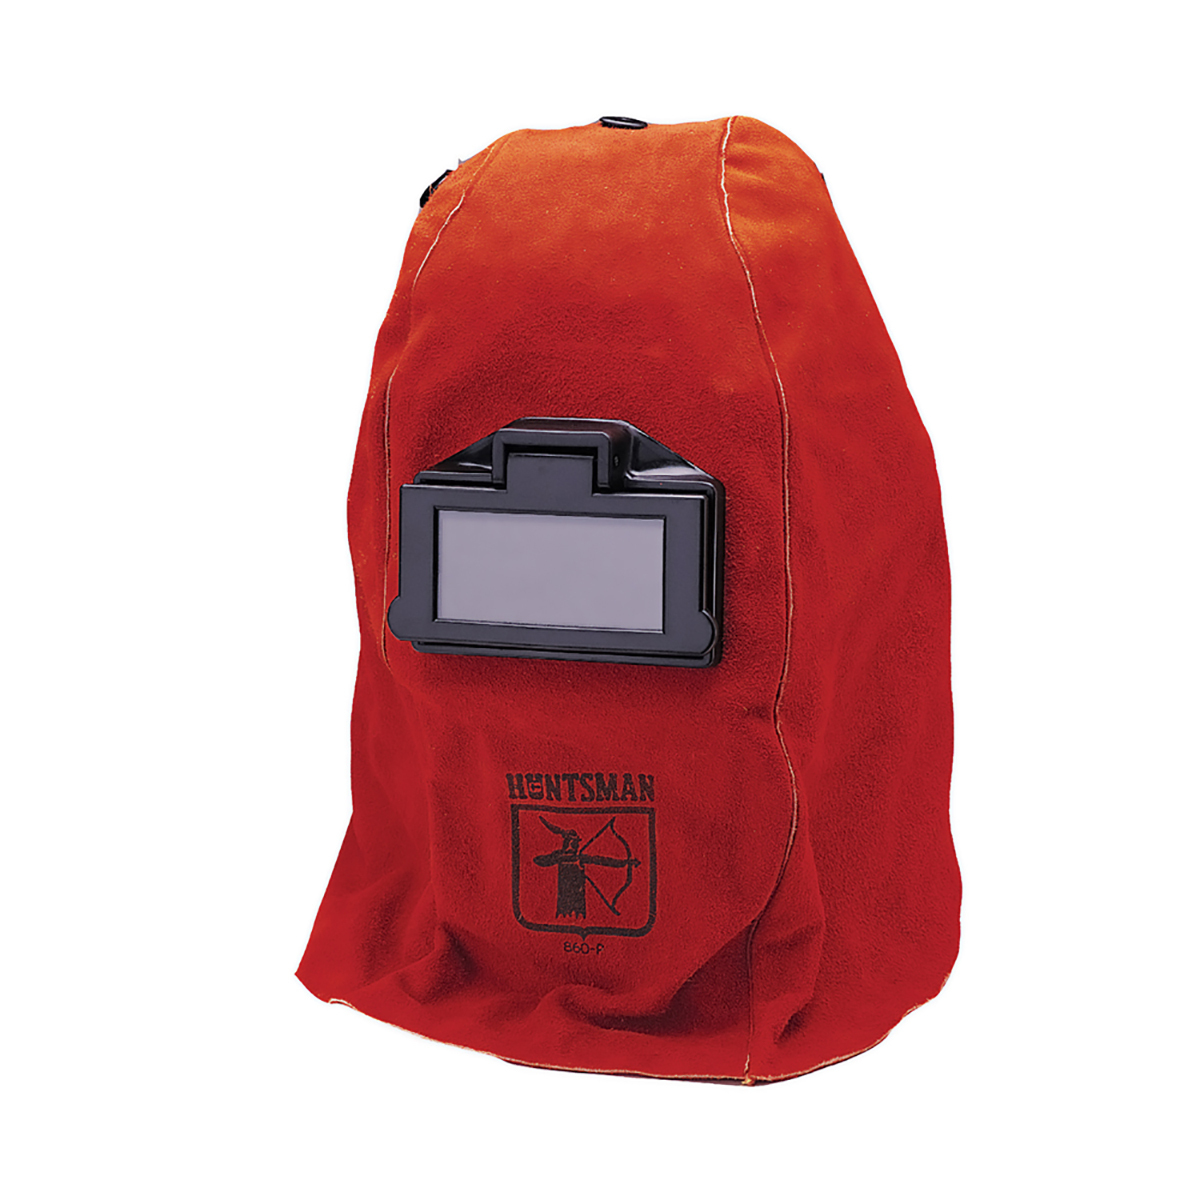 Jackson Safety® Huntsman® 860P Orange Leather Lift Front Welding Helmet With 2” X 4.25” Shade 10 Lens